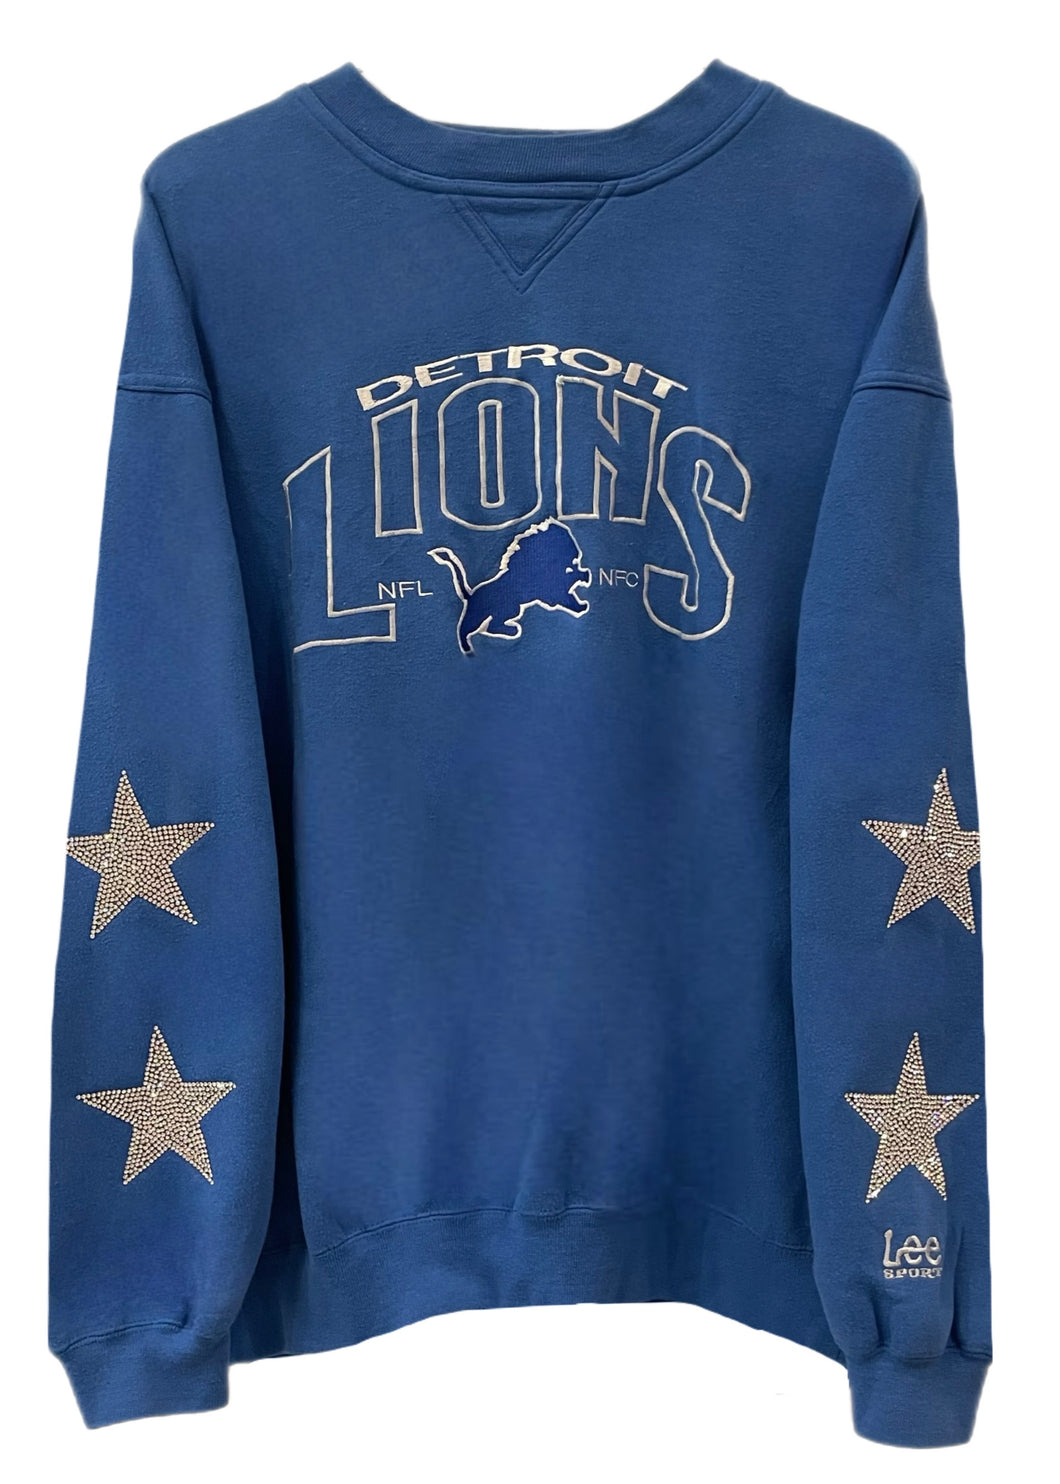 Detroit, Lions, NFL One of a KIND Vintage Sweatshirt with Crystal Star Design